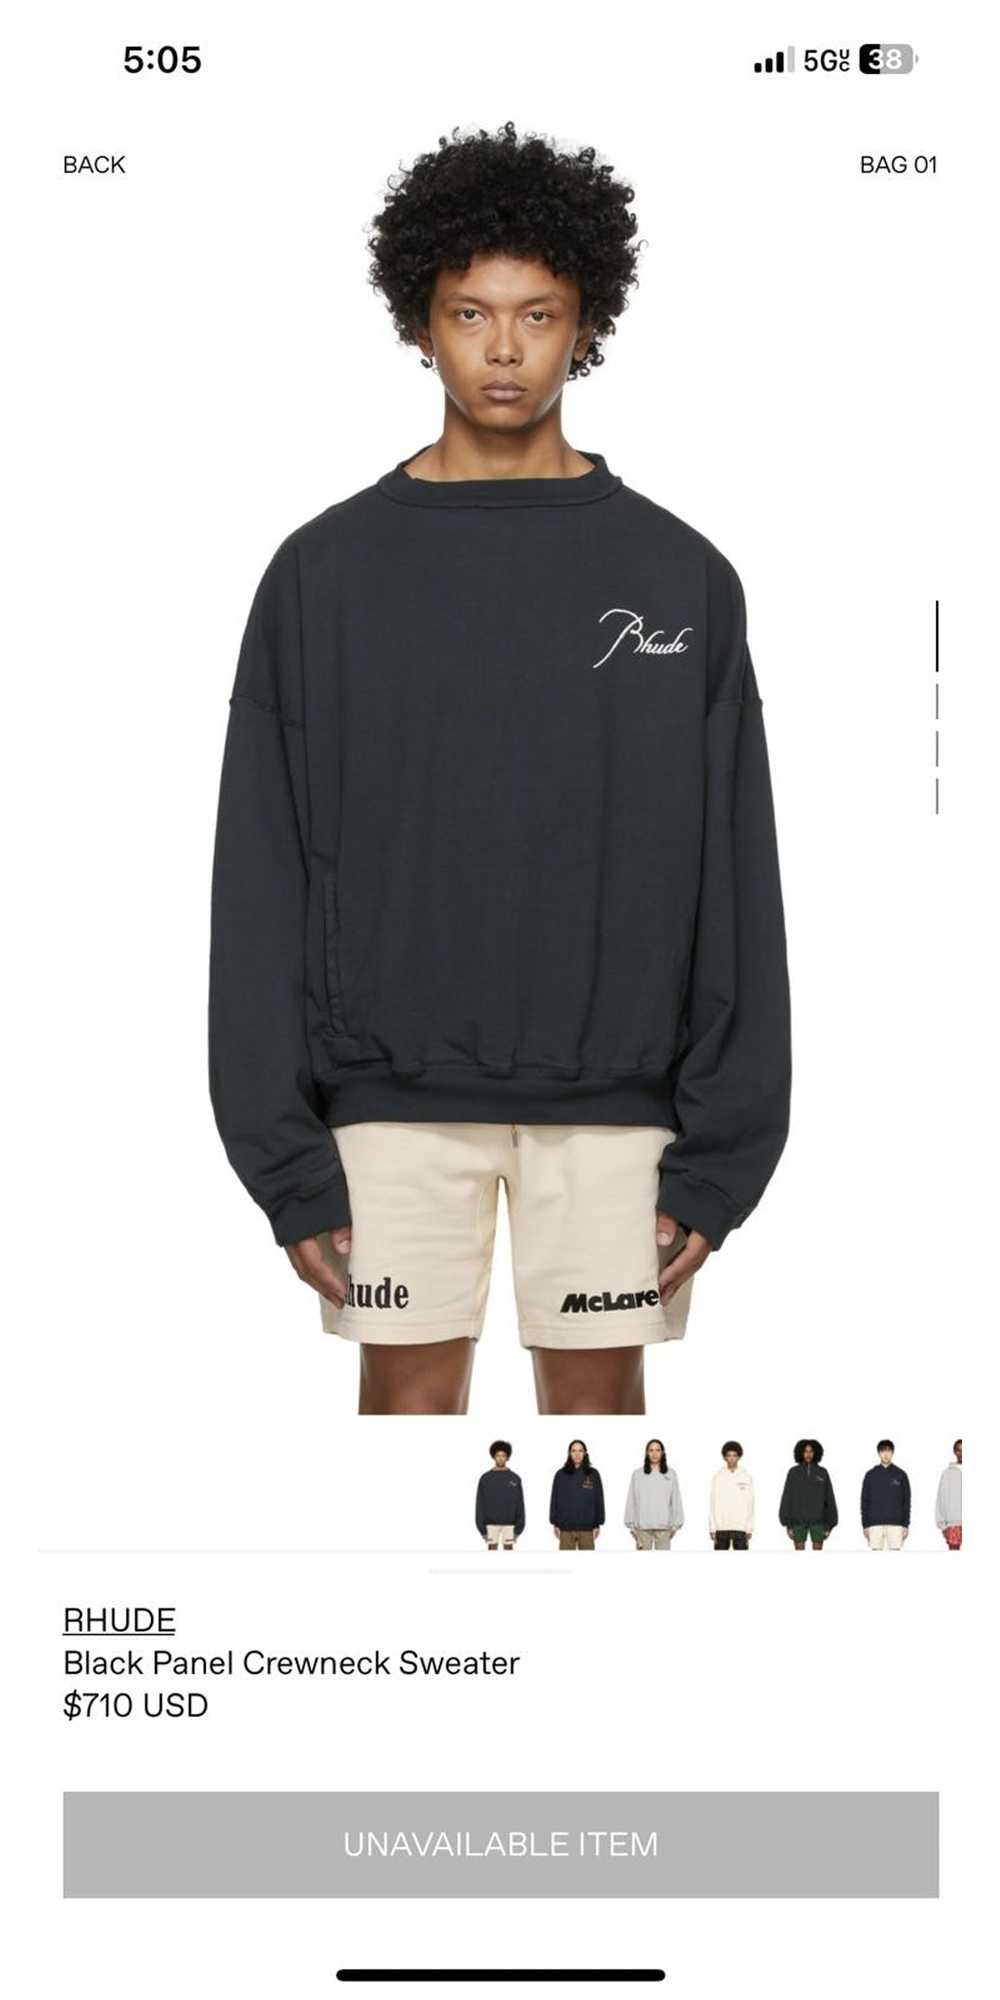 Rhude RHUDE Black Panel Crewneck Sweatshirt - image 9